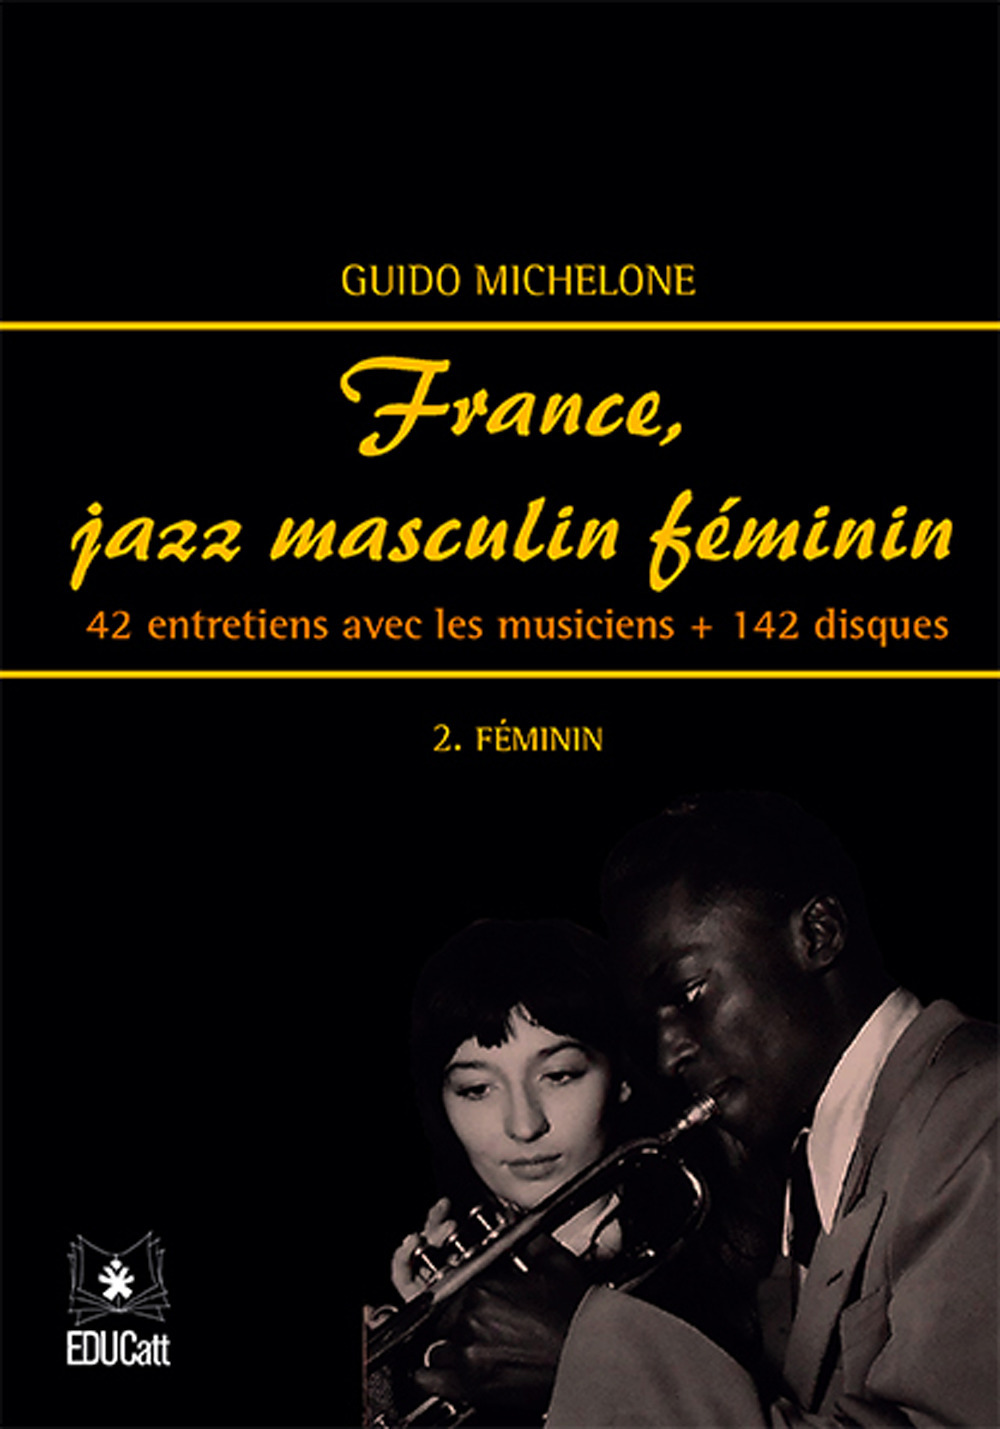 France, jazz masculin féminin. Vol. 2: Féminin. 42 entretiens avec les musiciens + 142 disques